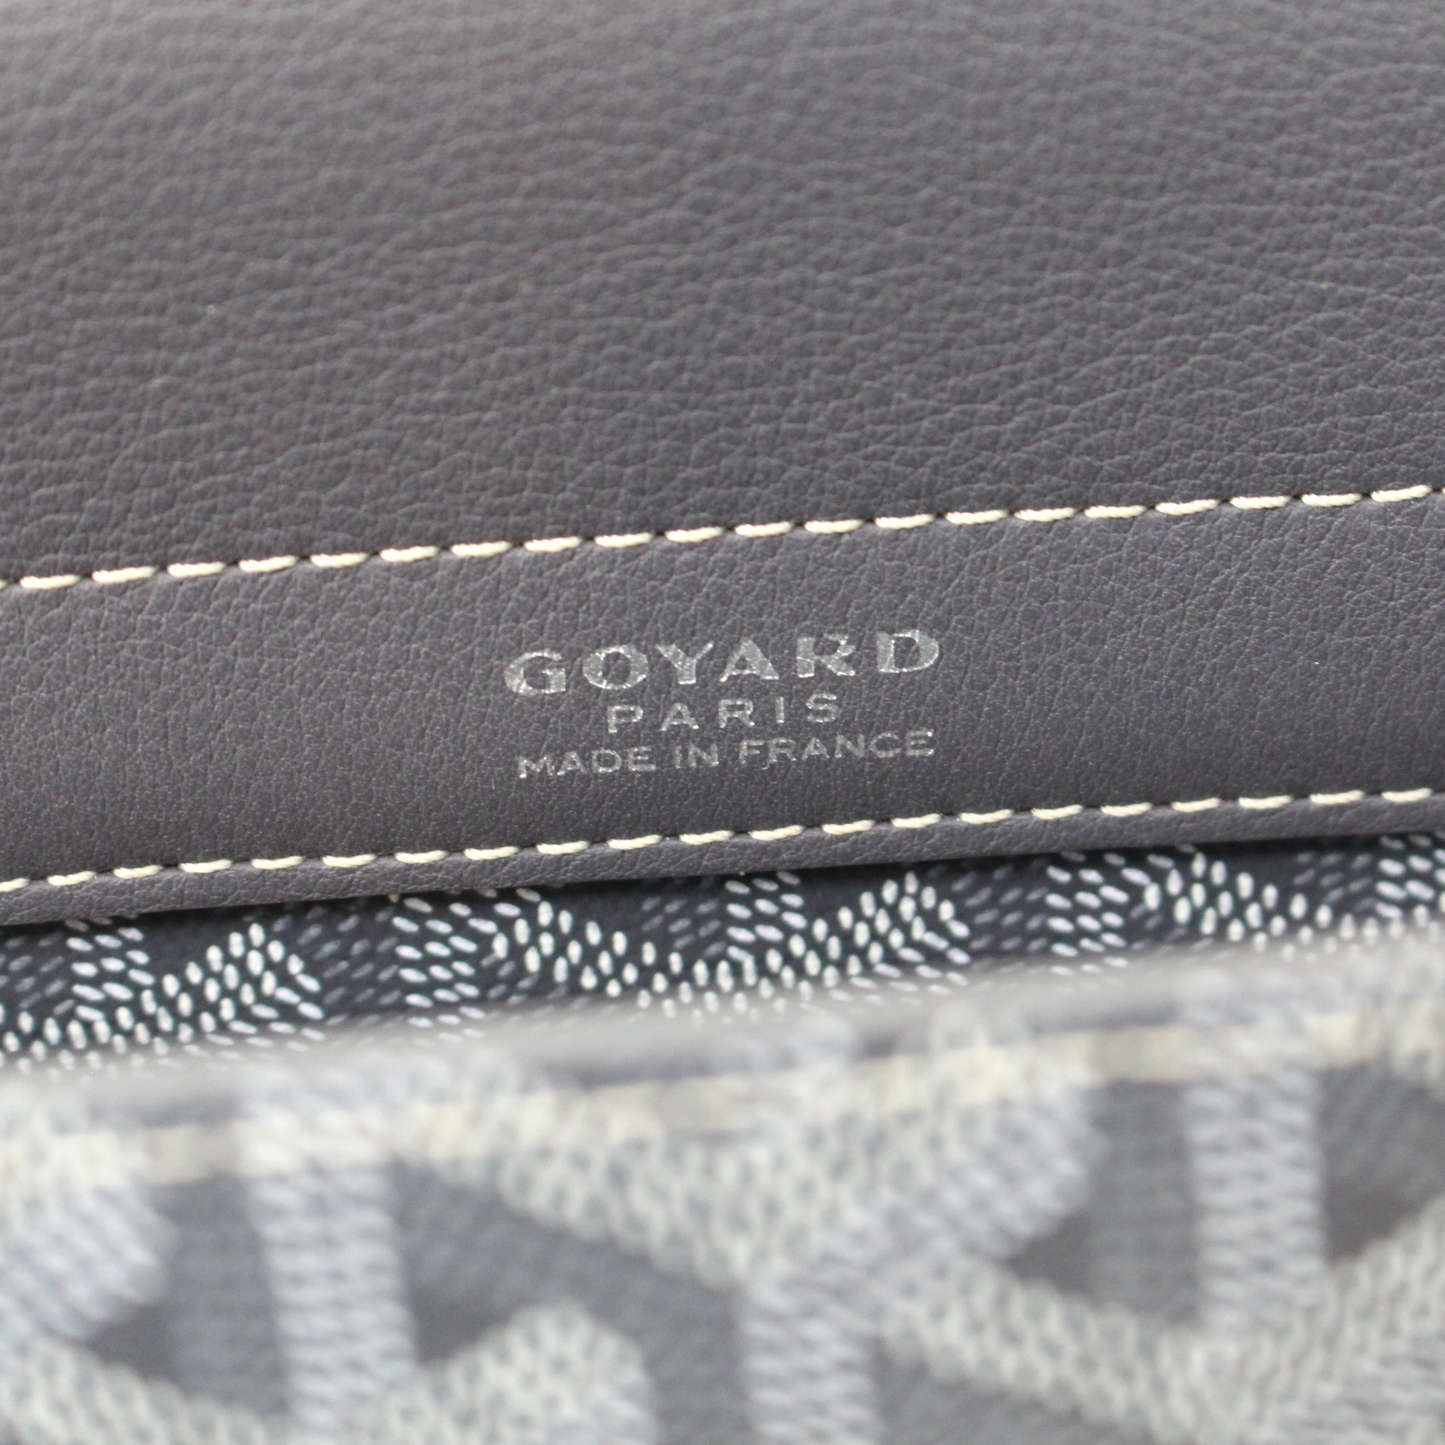 Goyard Rouette Soft Bag